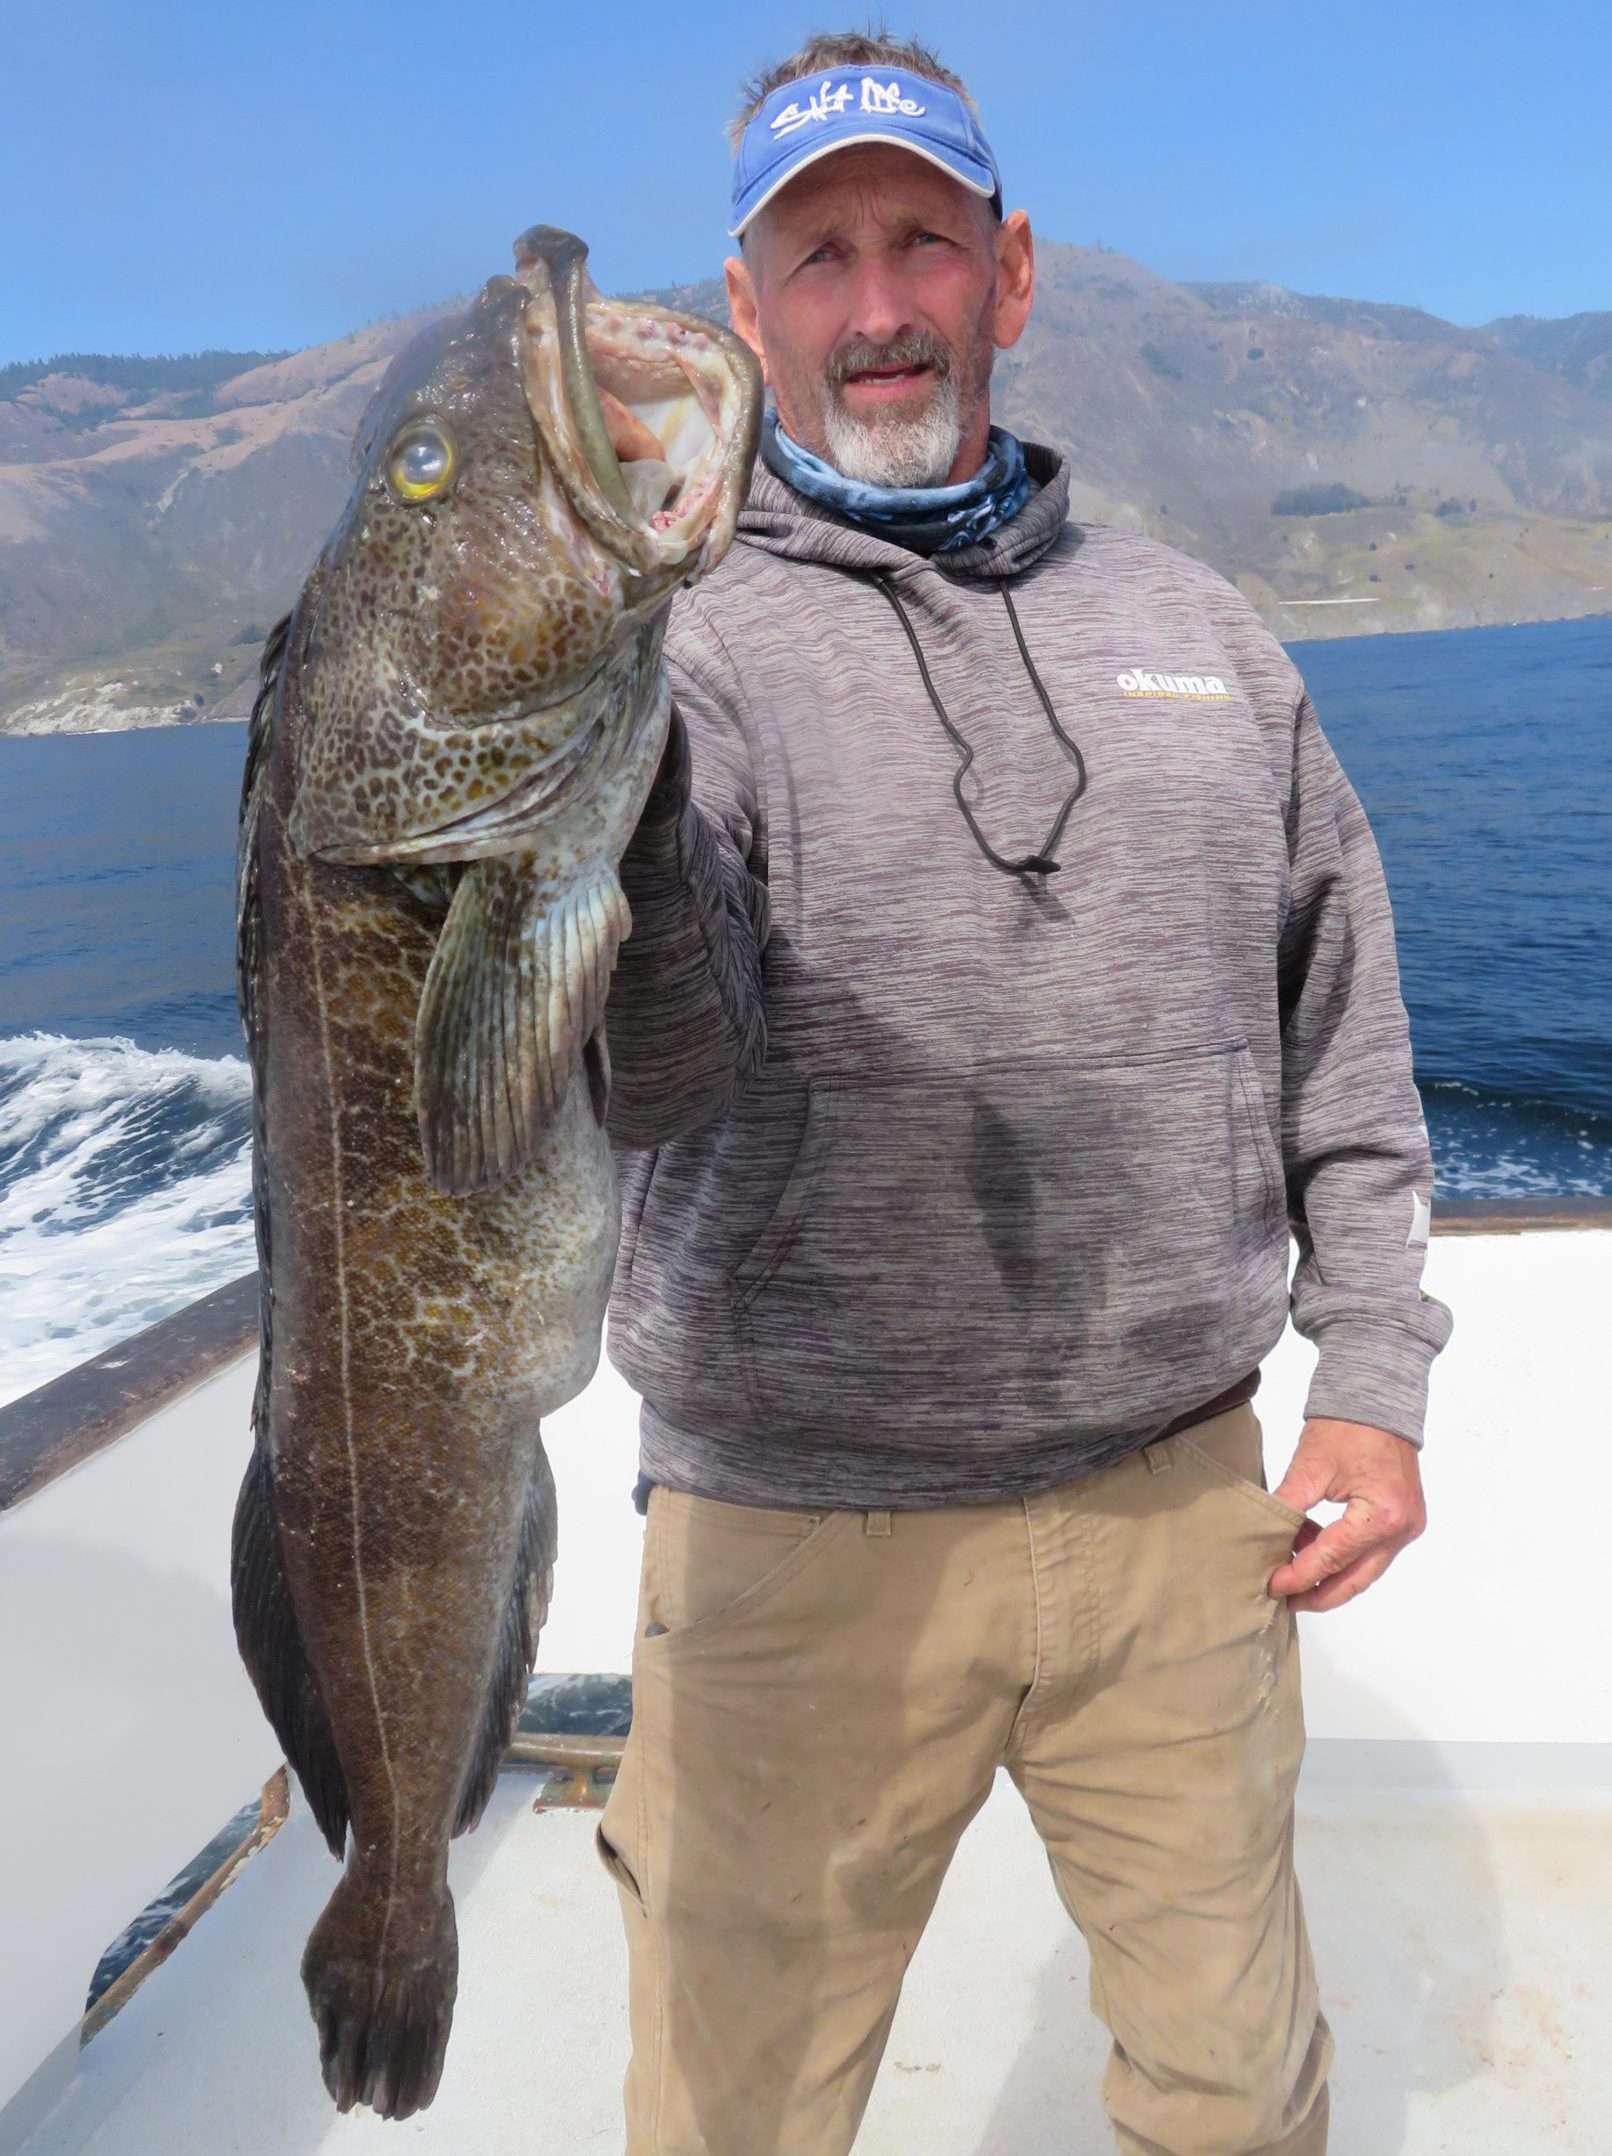 Lingcod Fishing with Swimbaits - Island Fisherman Magazine